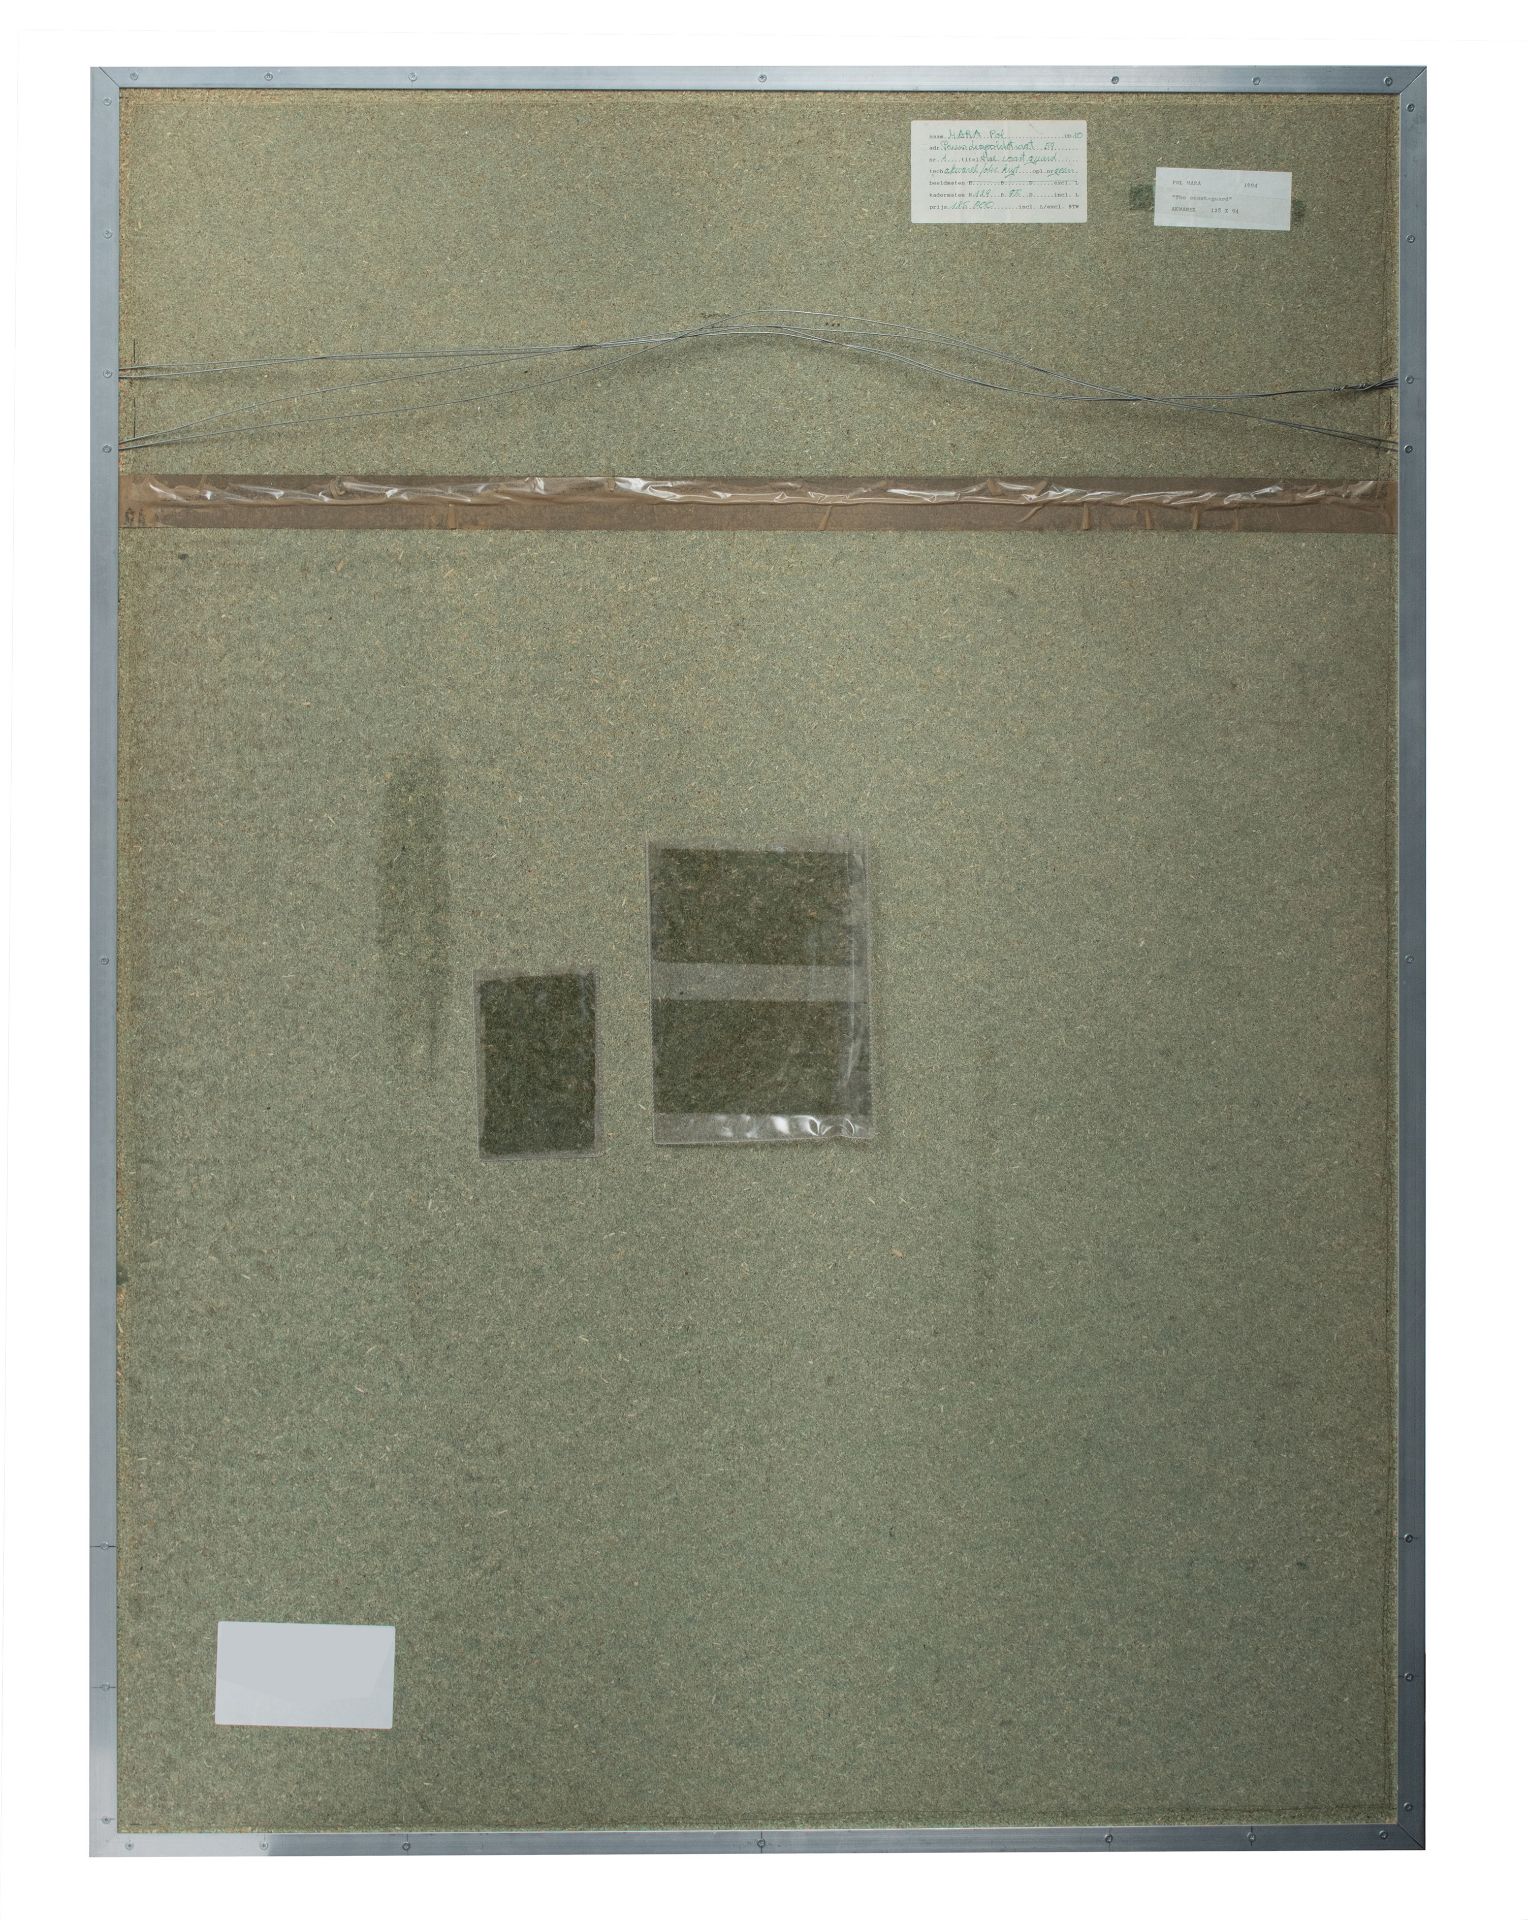 Pol Mara (1920-1998), The coast guard, mixed media on panel, 1994, 91 x 125 cm - Image 3 of 5